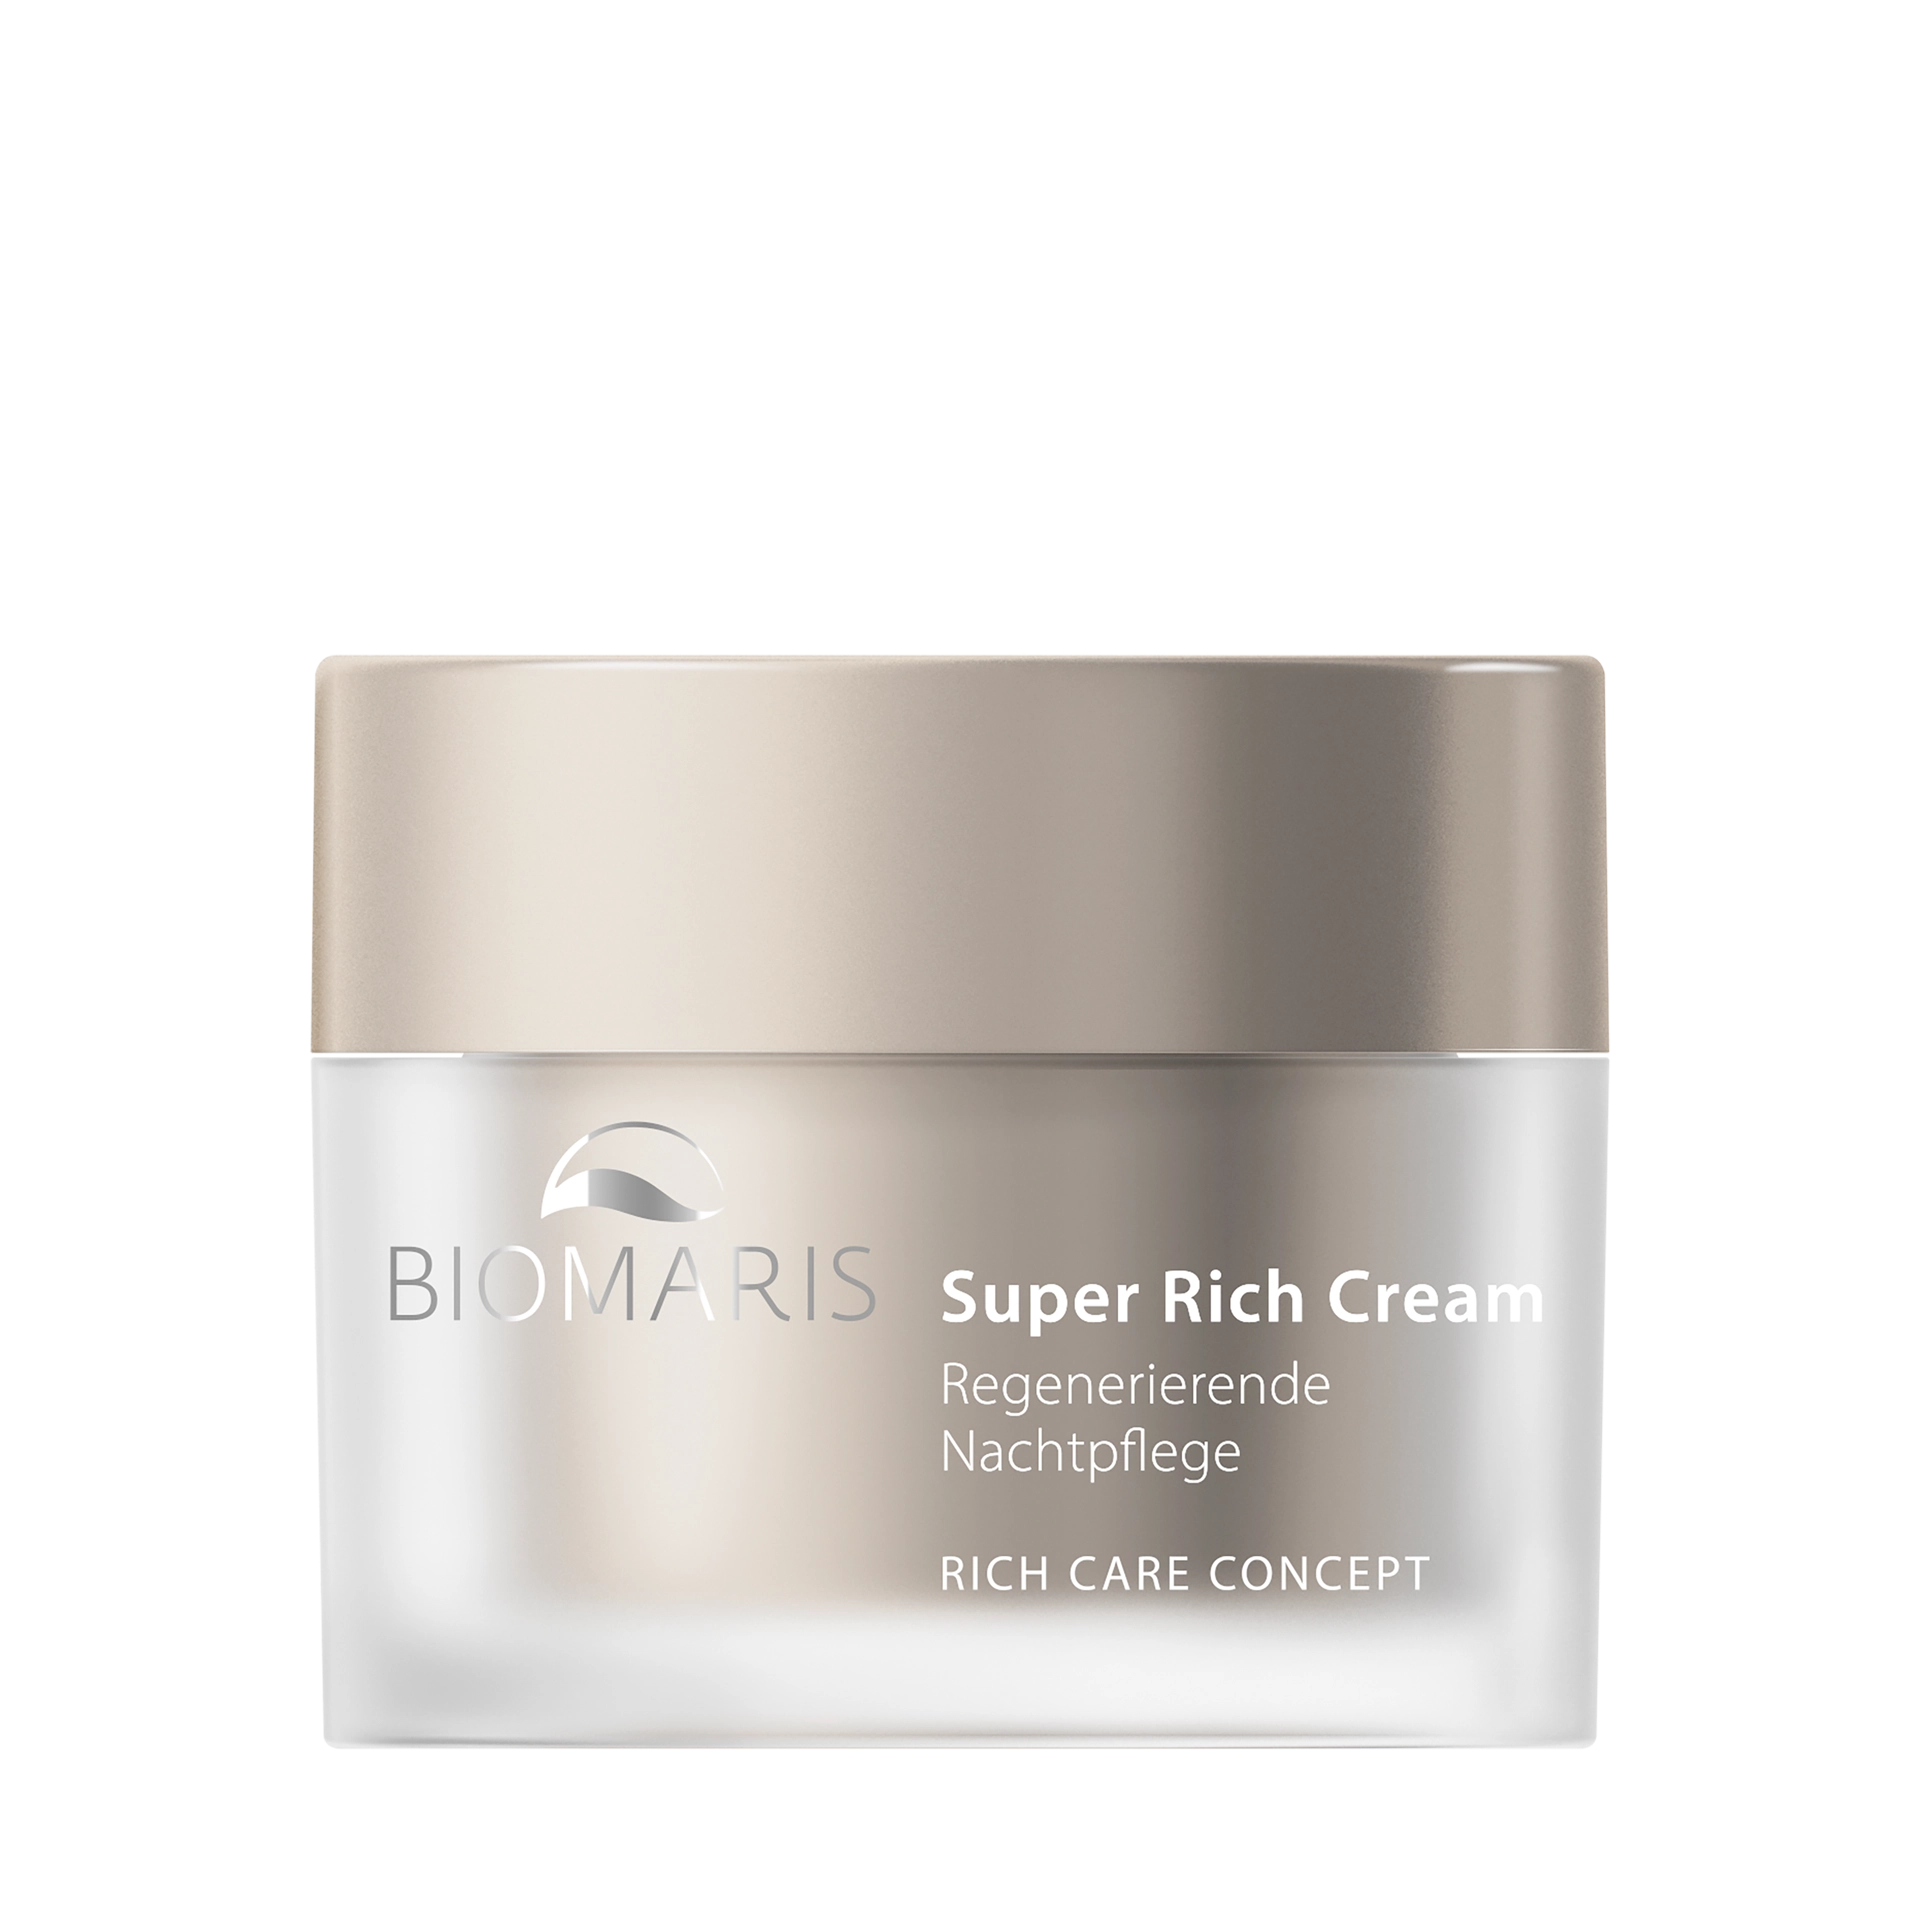 Super Rich Cream